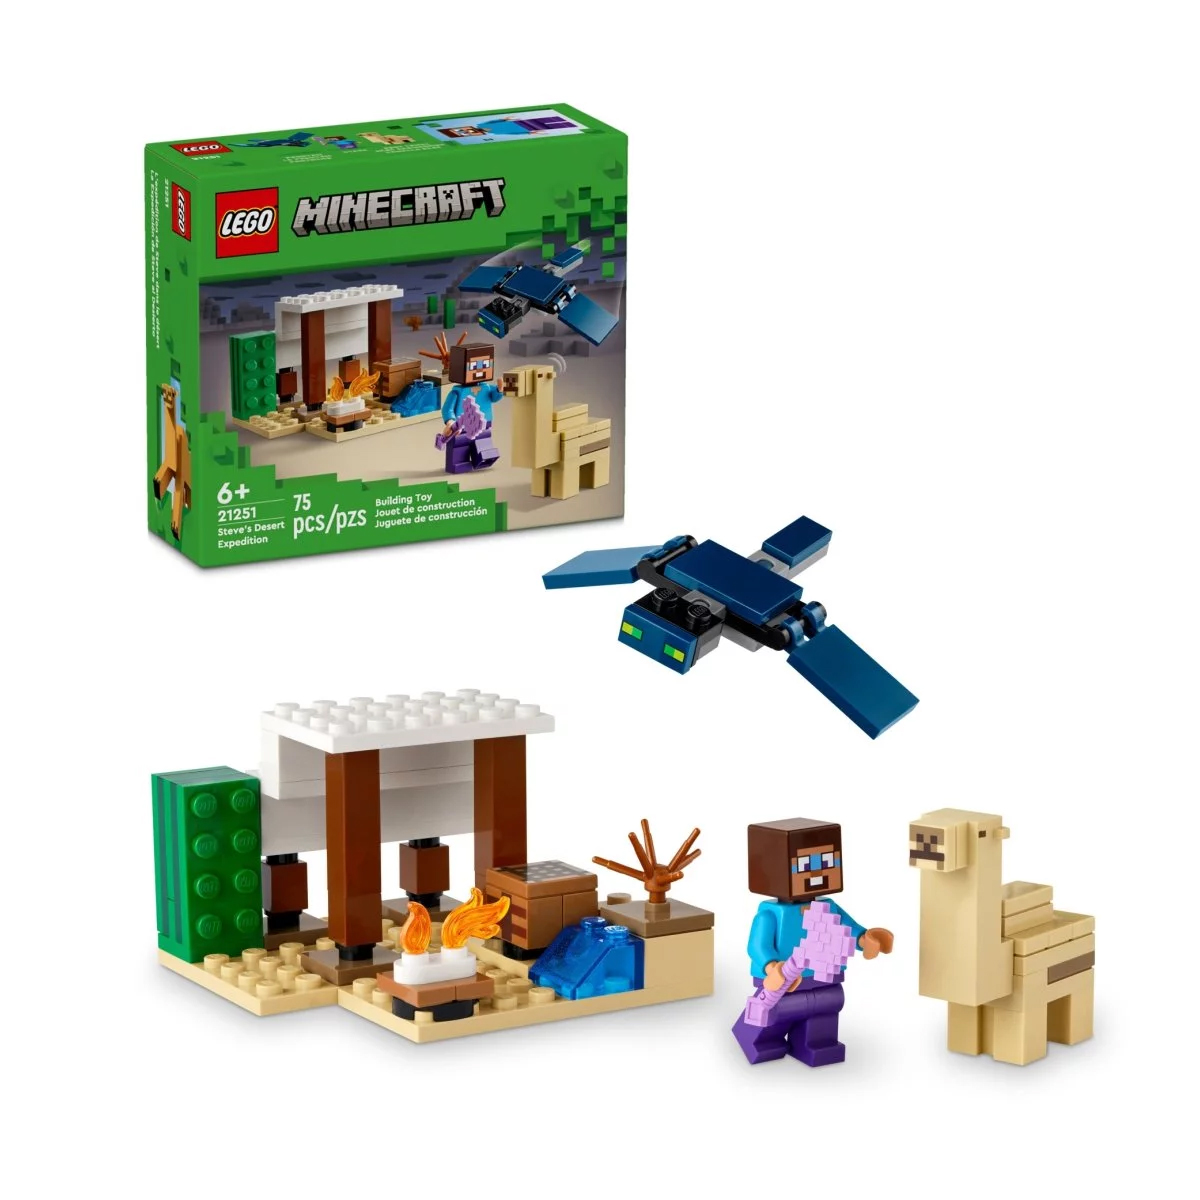 цена Конструктор Lego Minecraft Steve's Desert Expedition 21251, 75 деталей